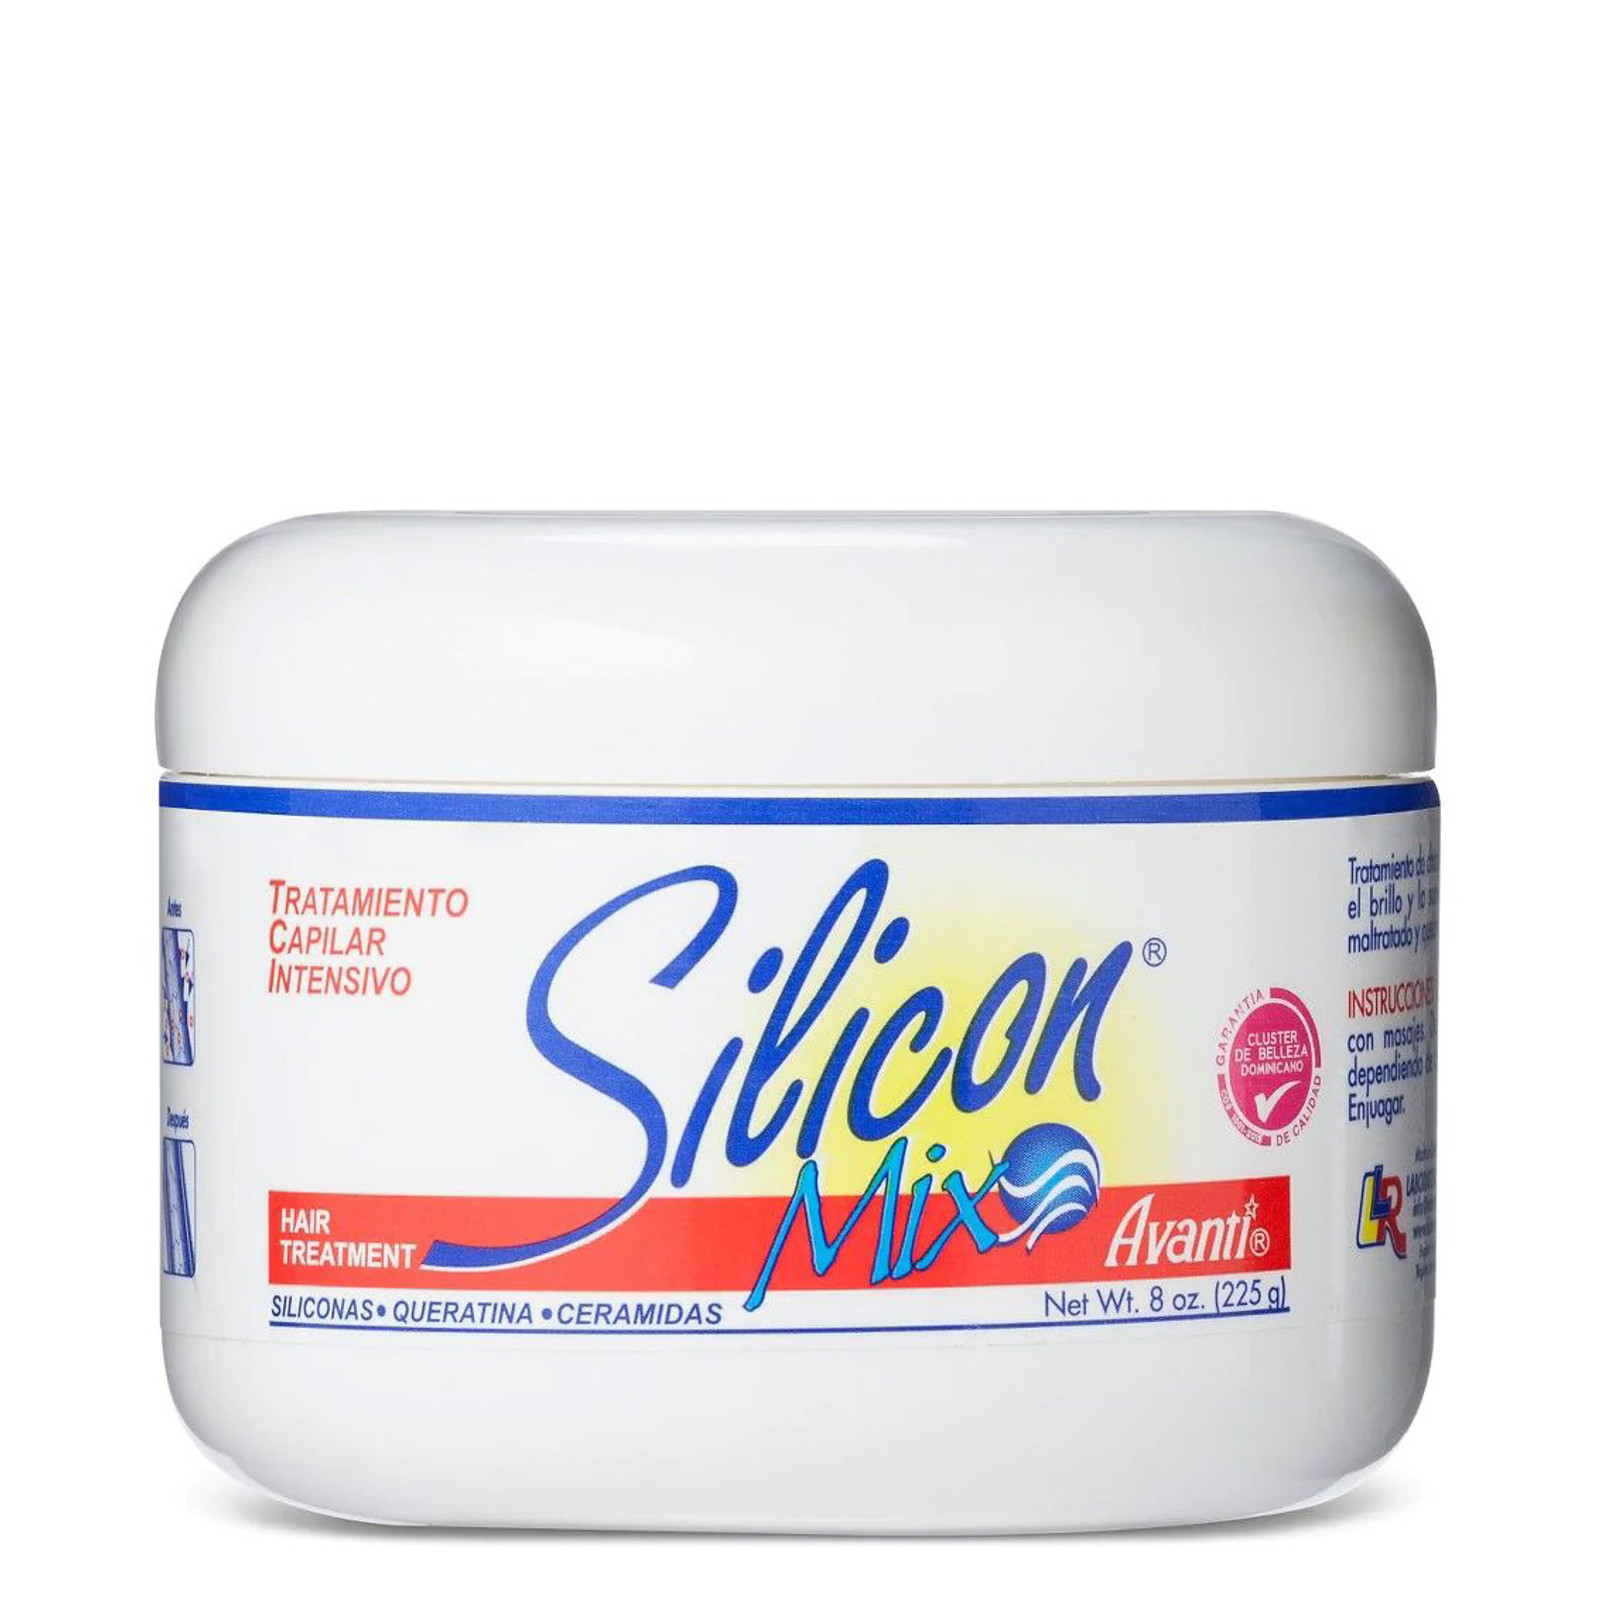 Silicon Mix Moroccan Argan Oil Hair Treatment - 8 oz jar